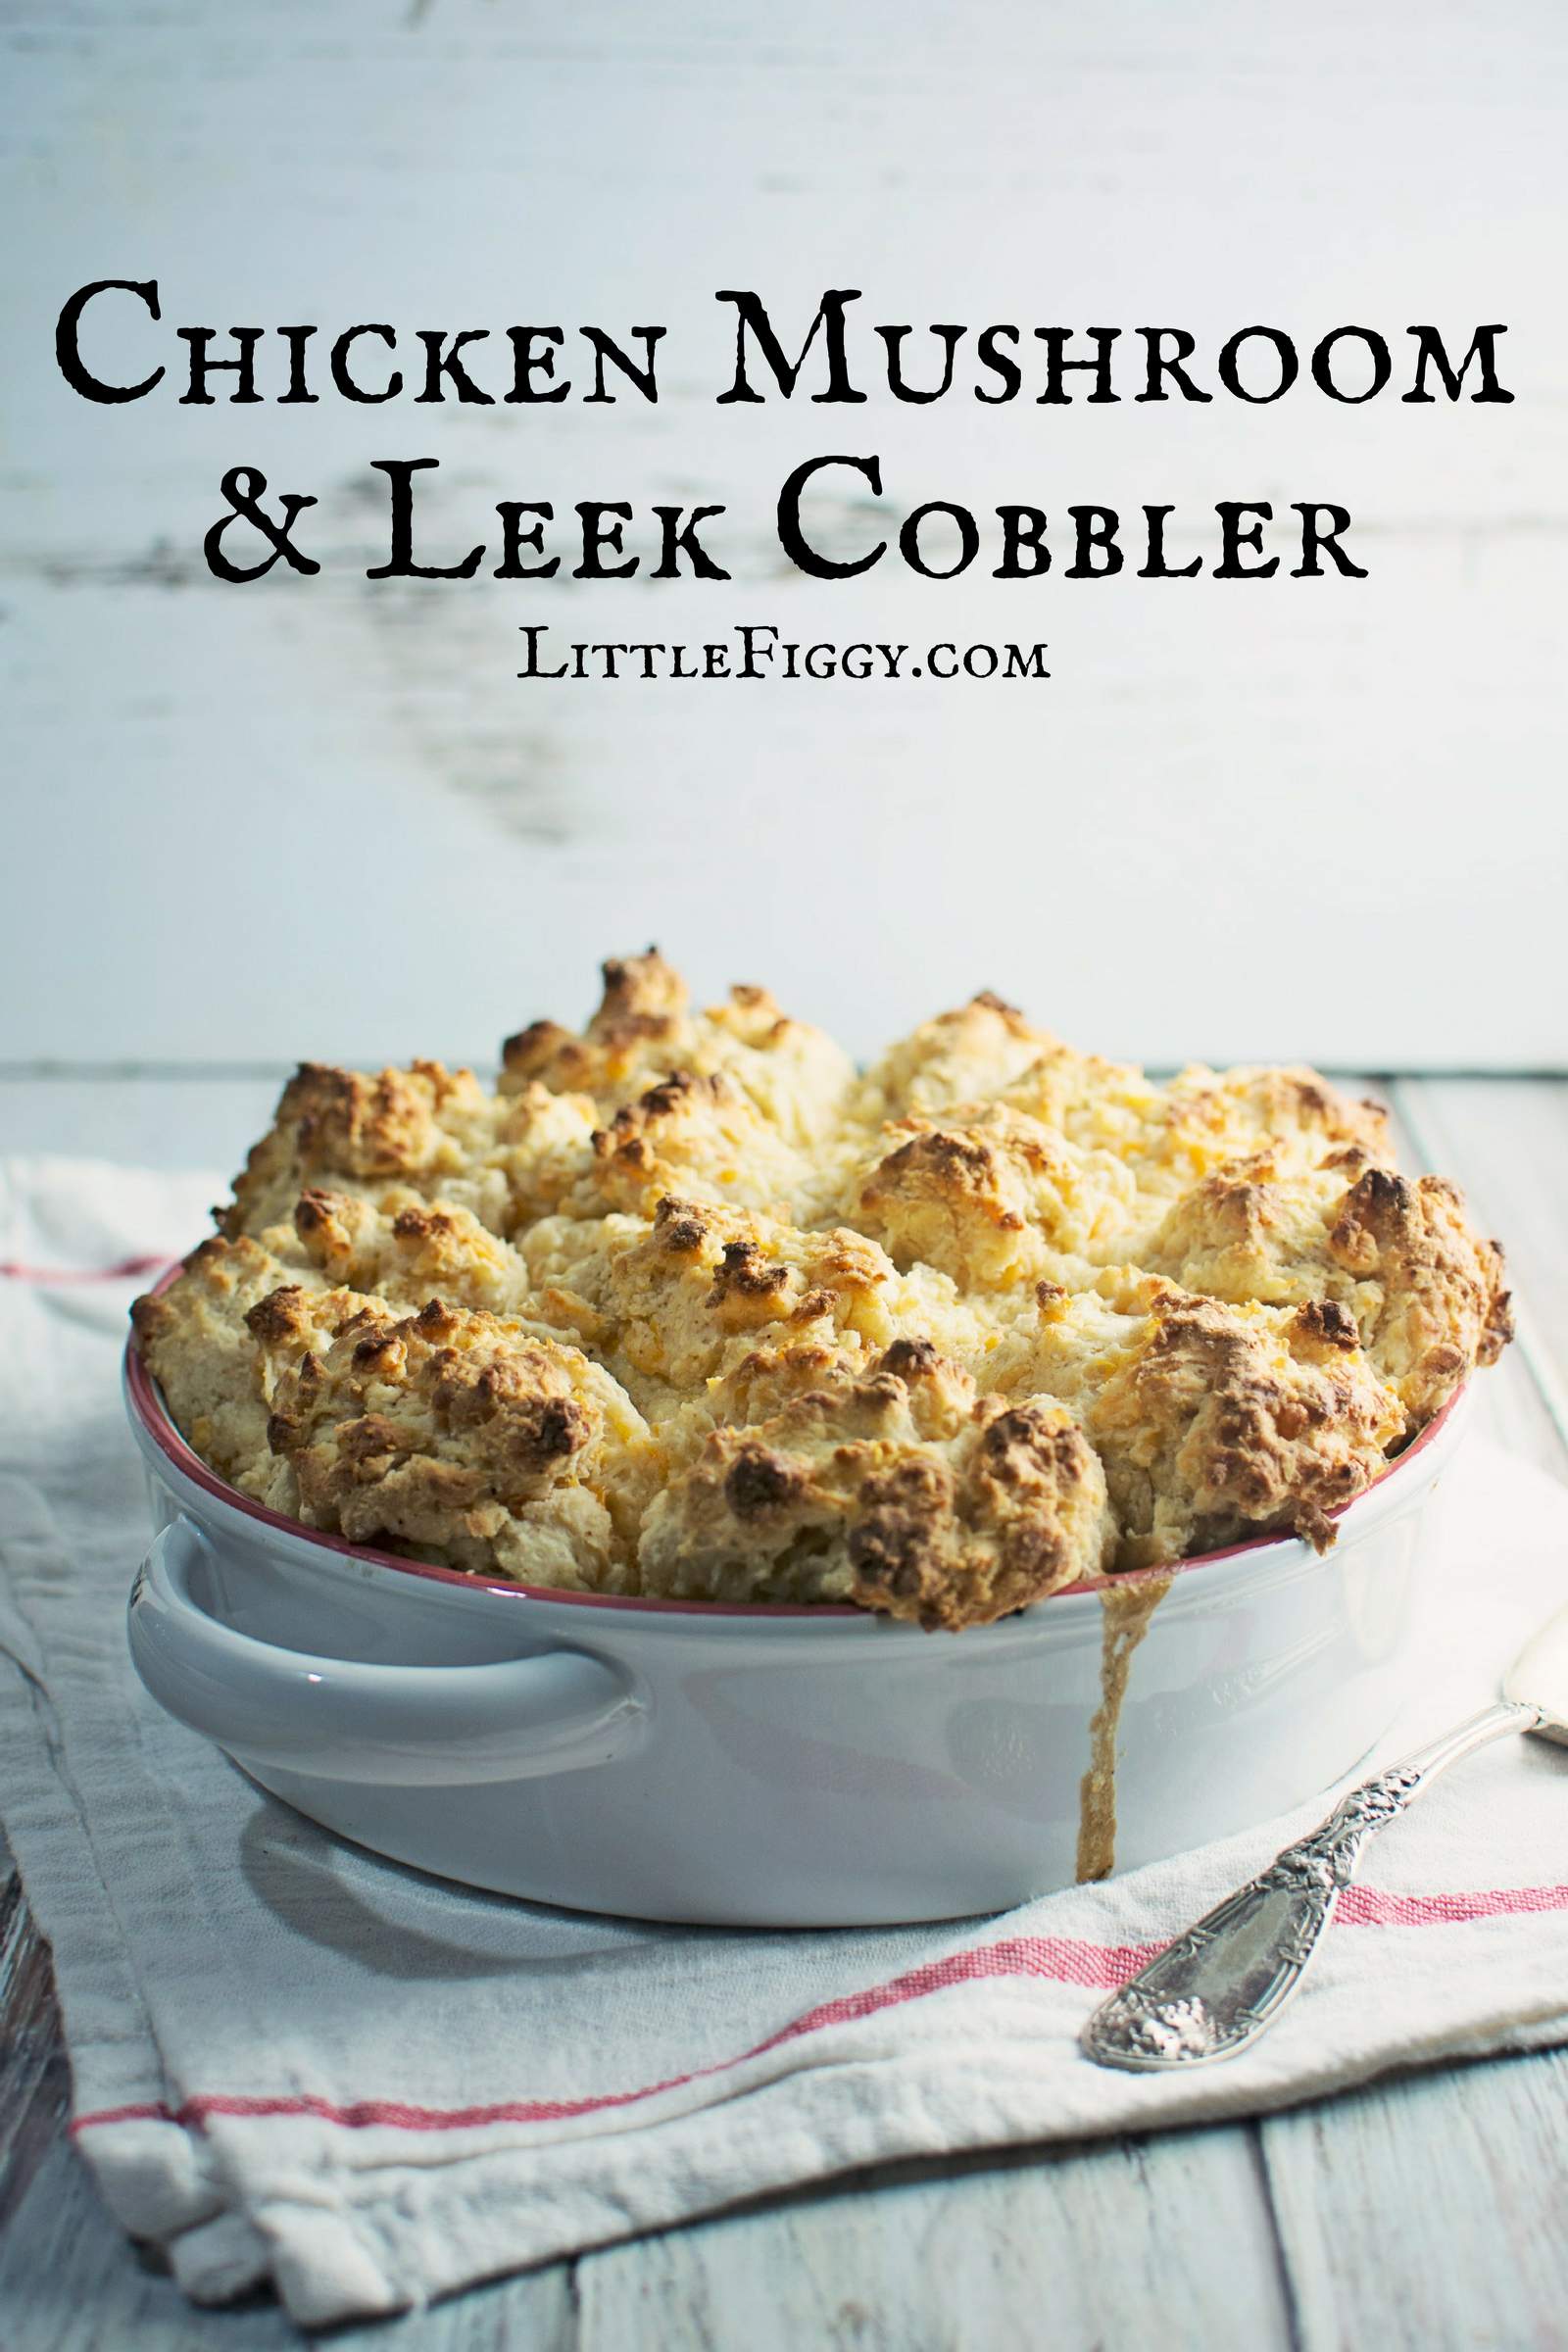 Enjoy this rich and warming Chicken Mushroom & Leek Cobbler for dinner! Recipe @LittleFiggyFood